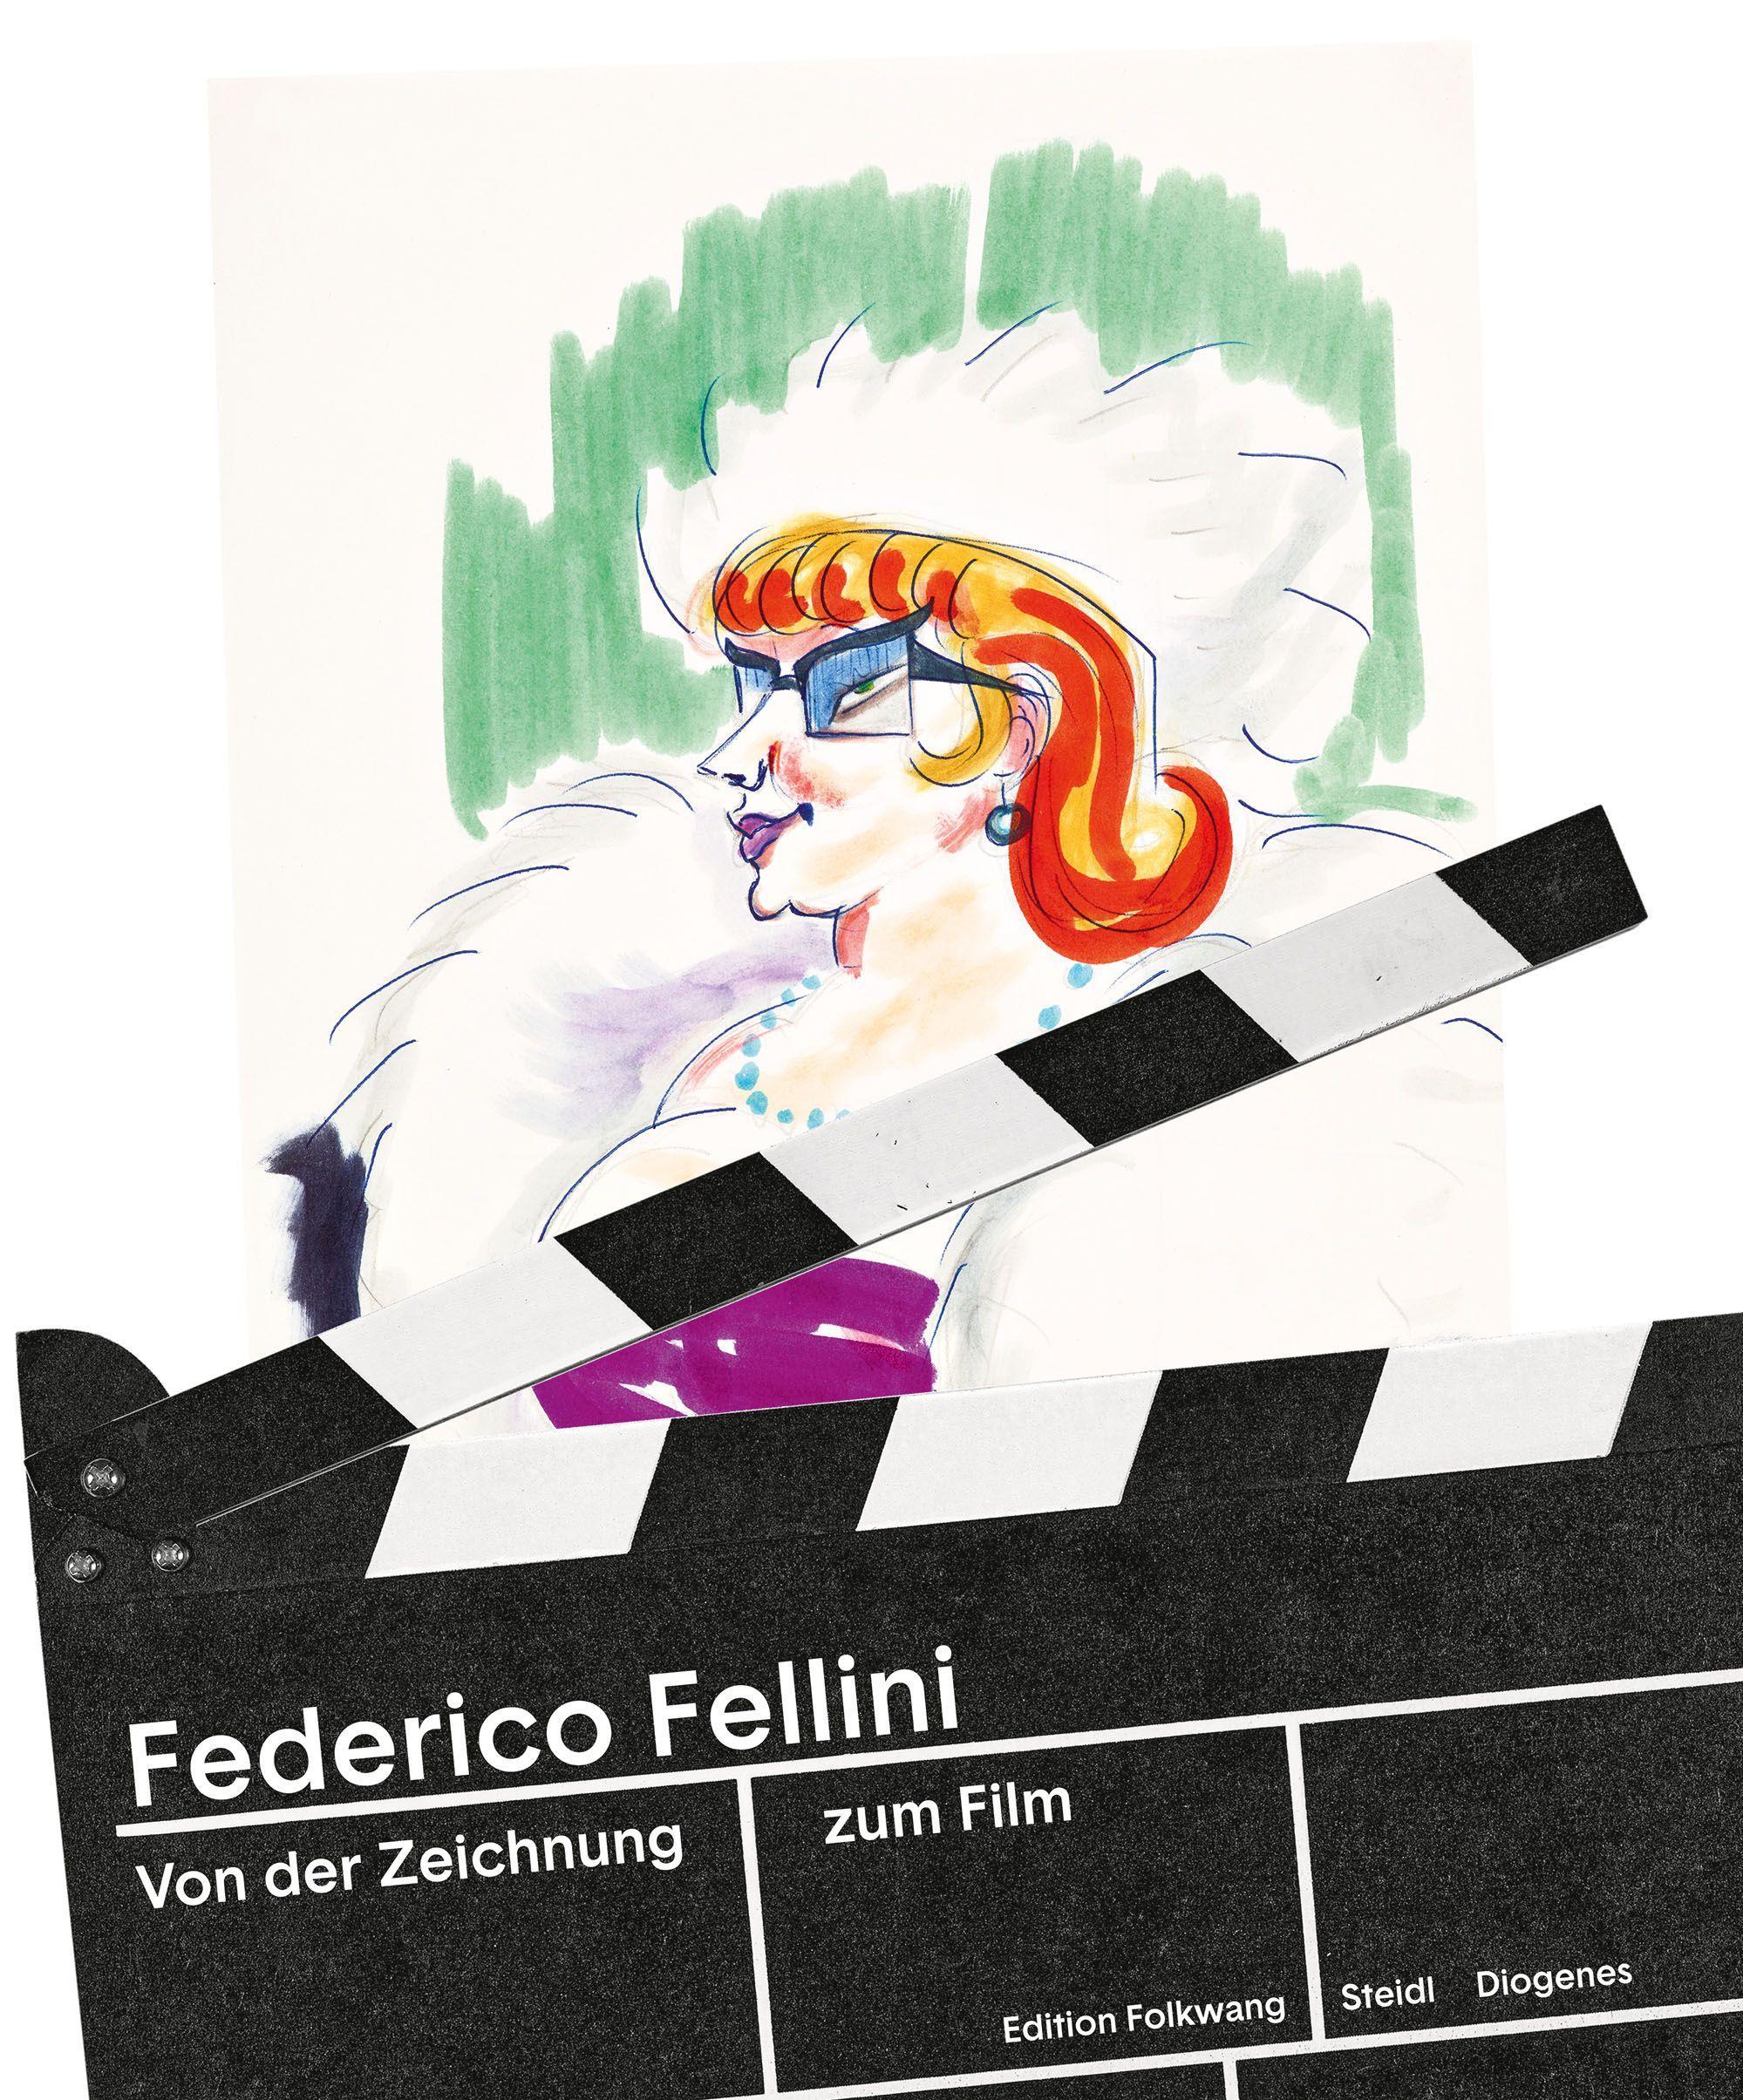 Fellini erotic drawings federico Federico Fellini.